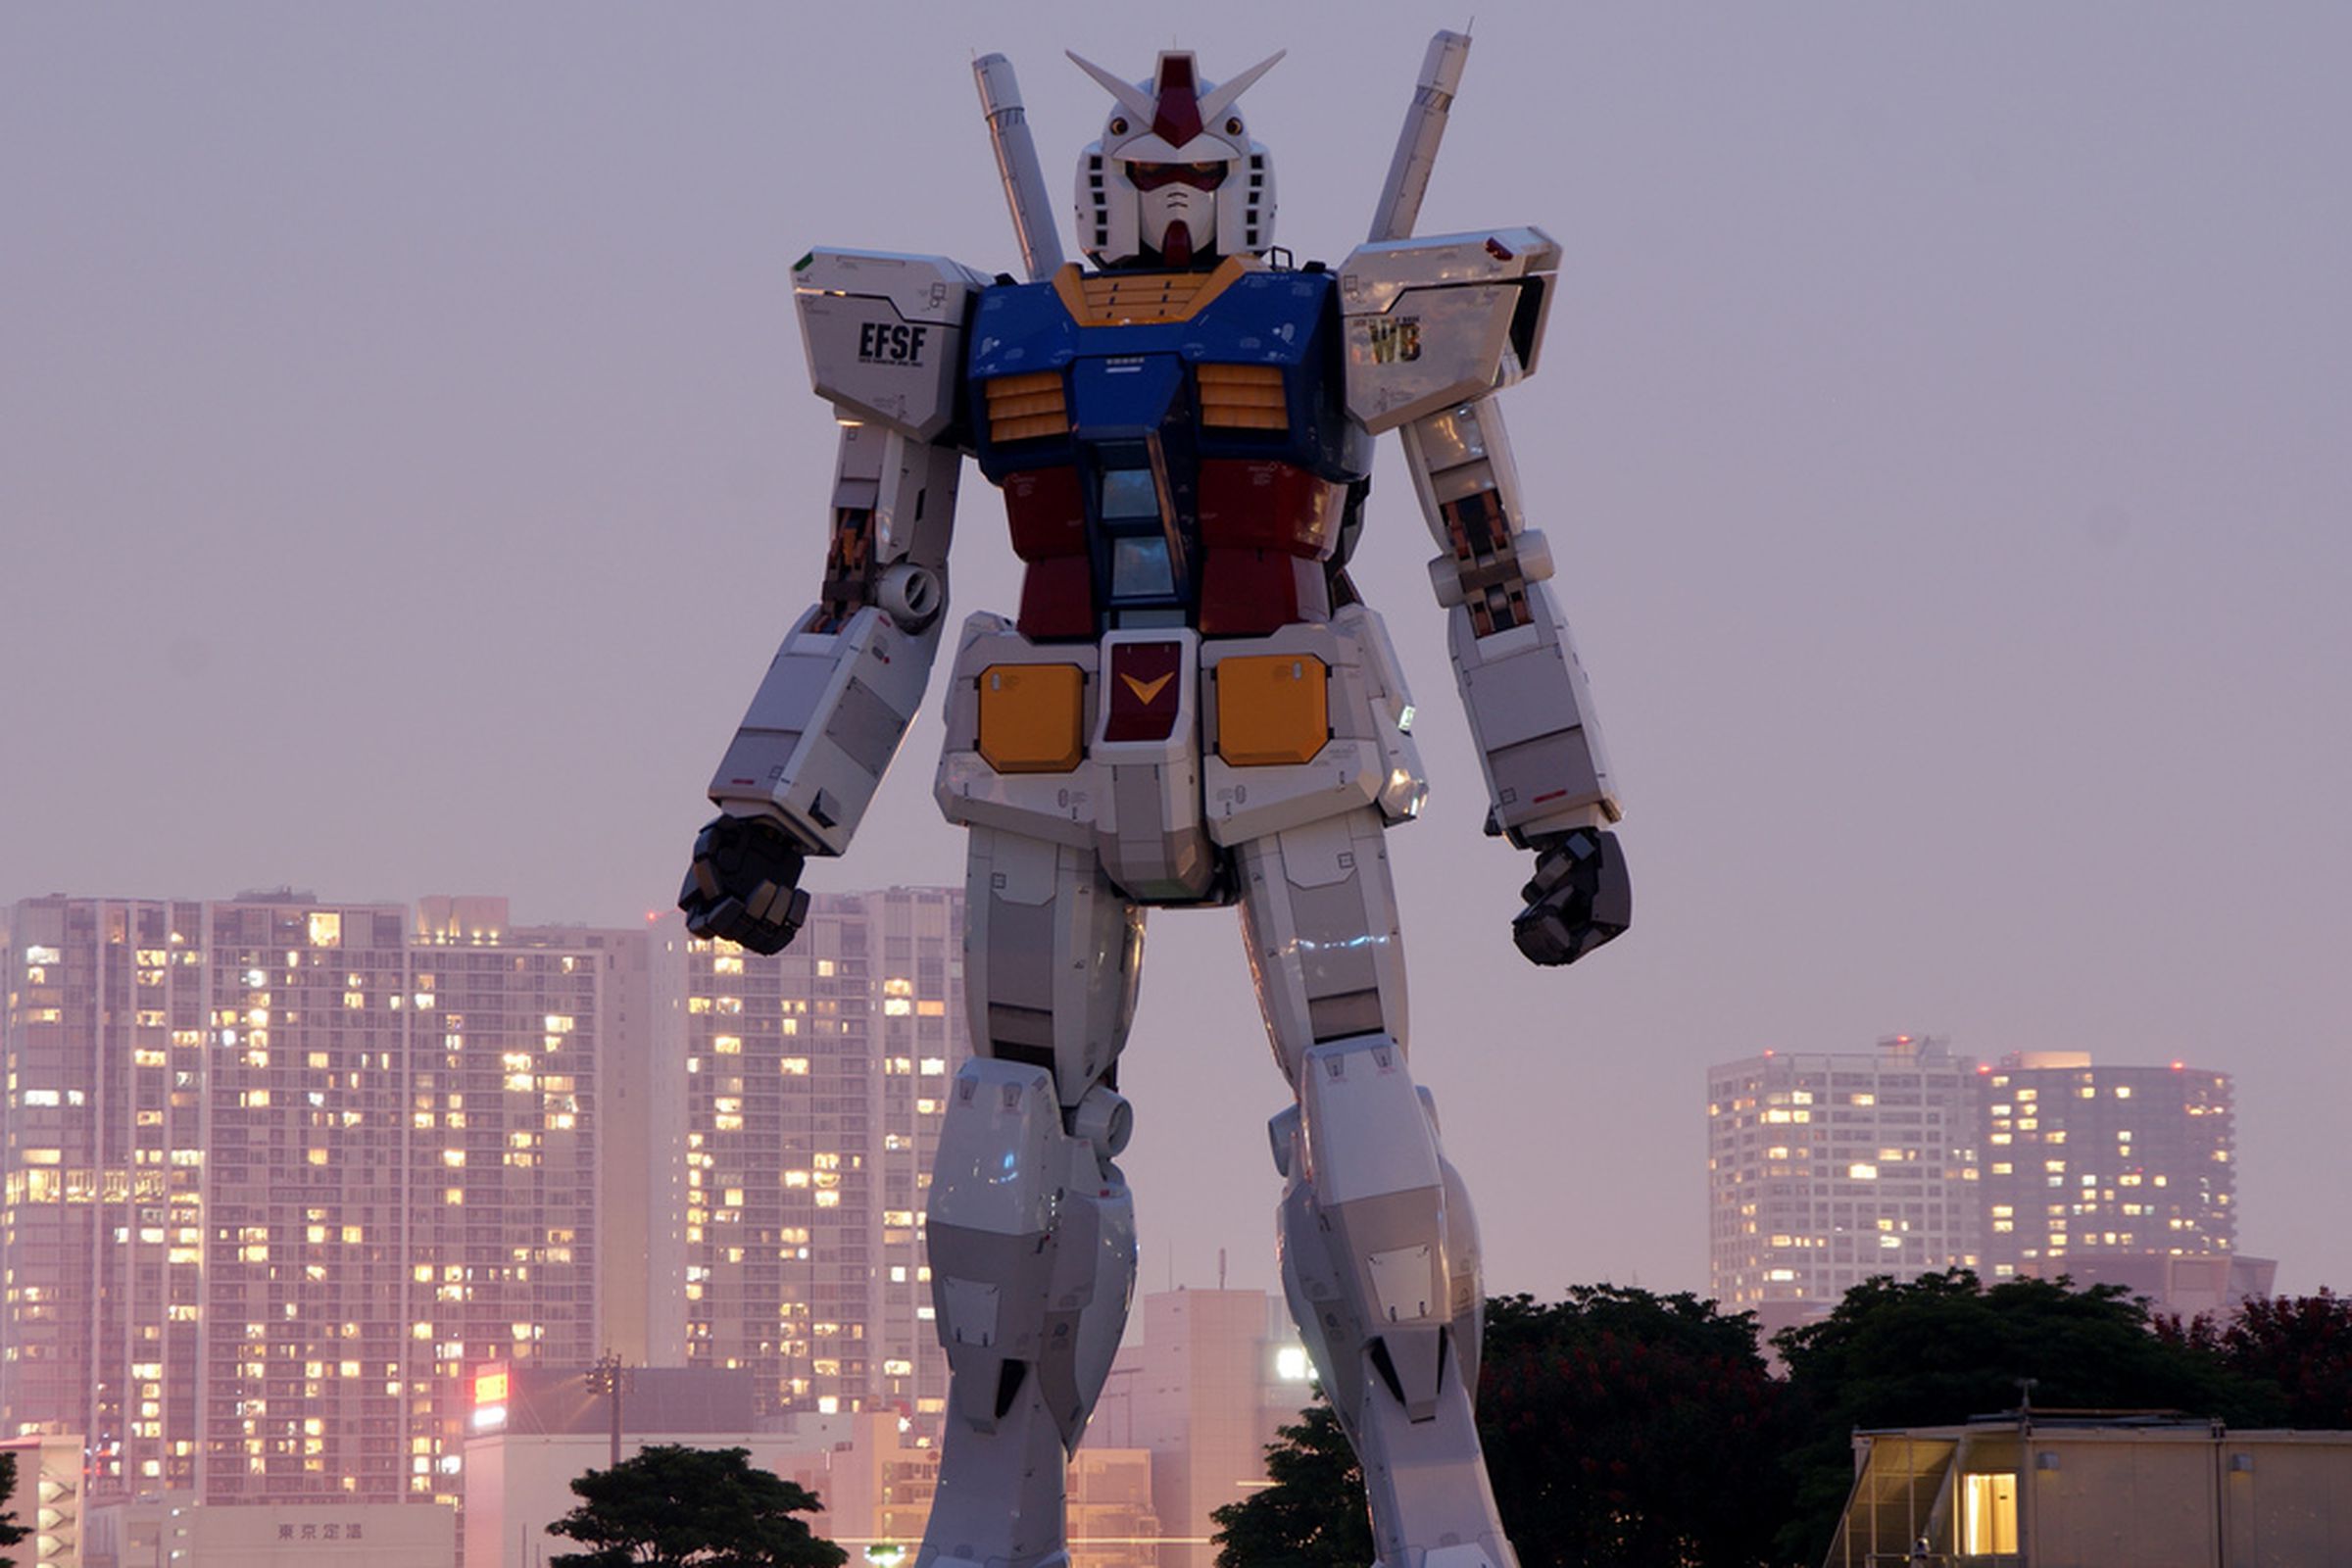 Mobile Suit Gundam statue in Tokyo